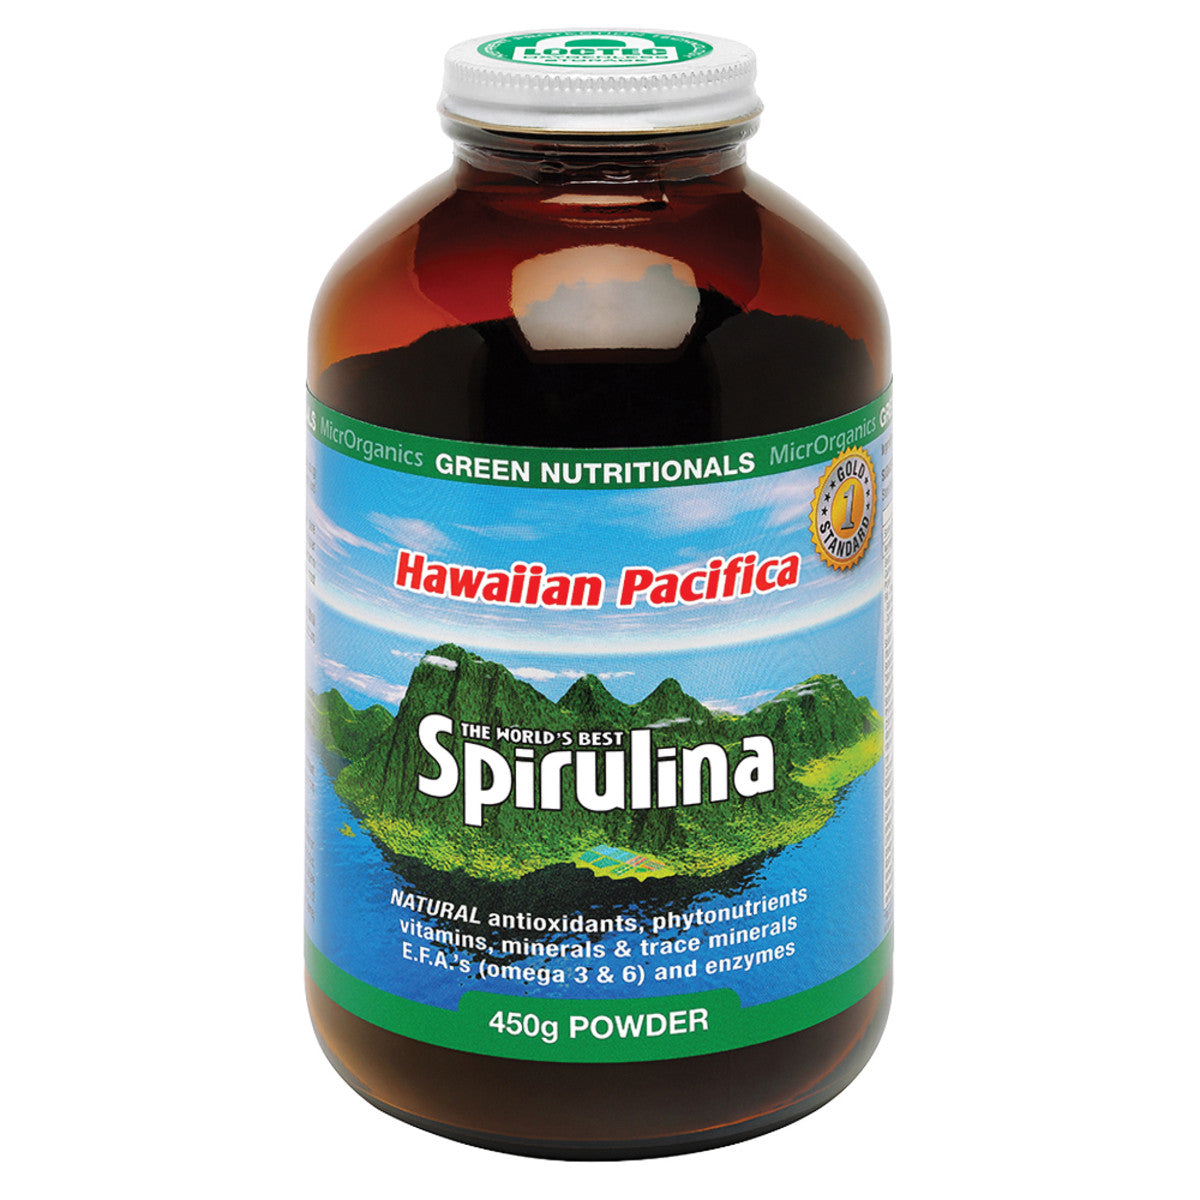 MicrOrganics Green Nutrit Hawaiian Pac. Spirulina Pwd 450g